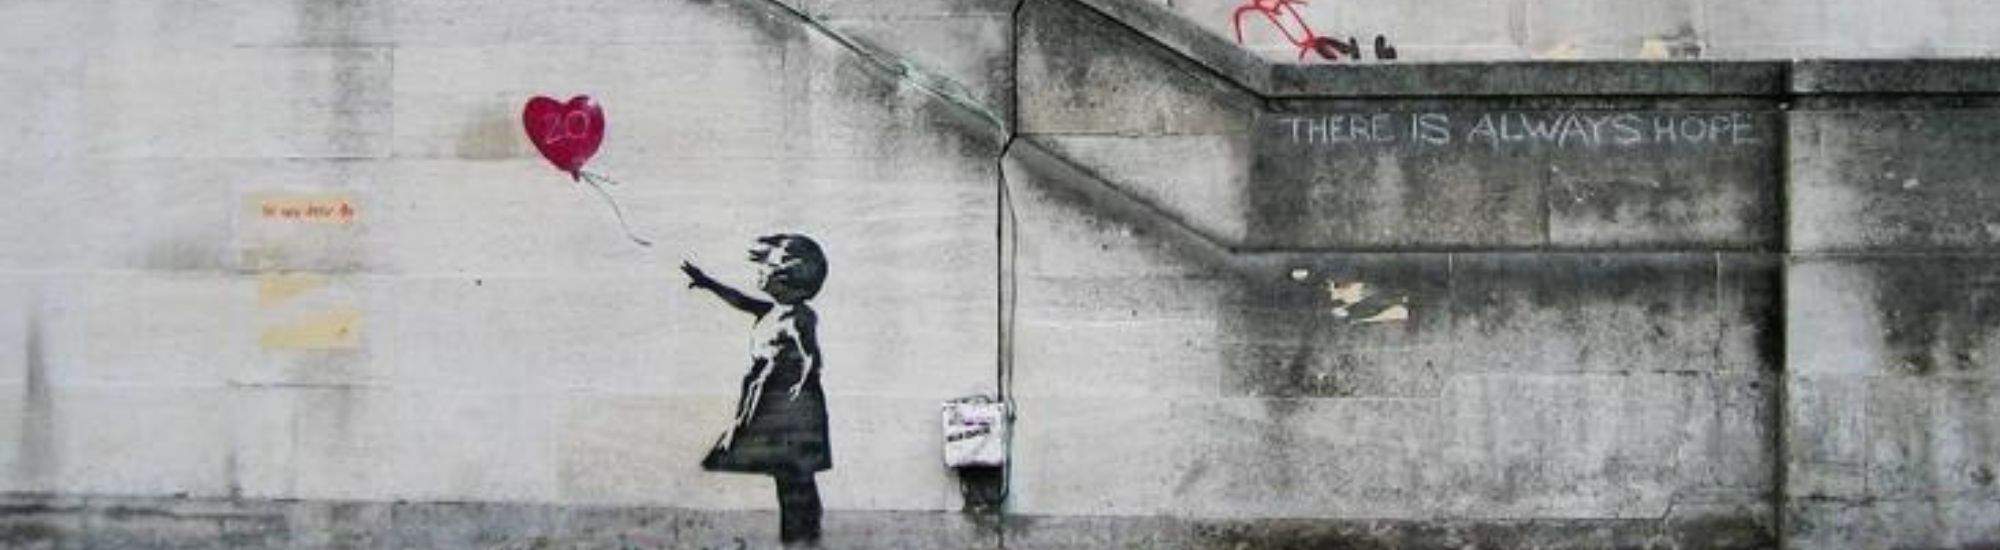 Banksy in Krakau: Weltbekannte Straßenkunst